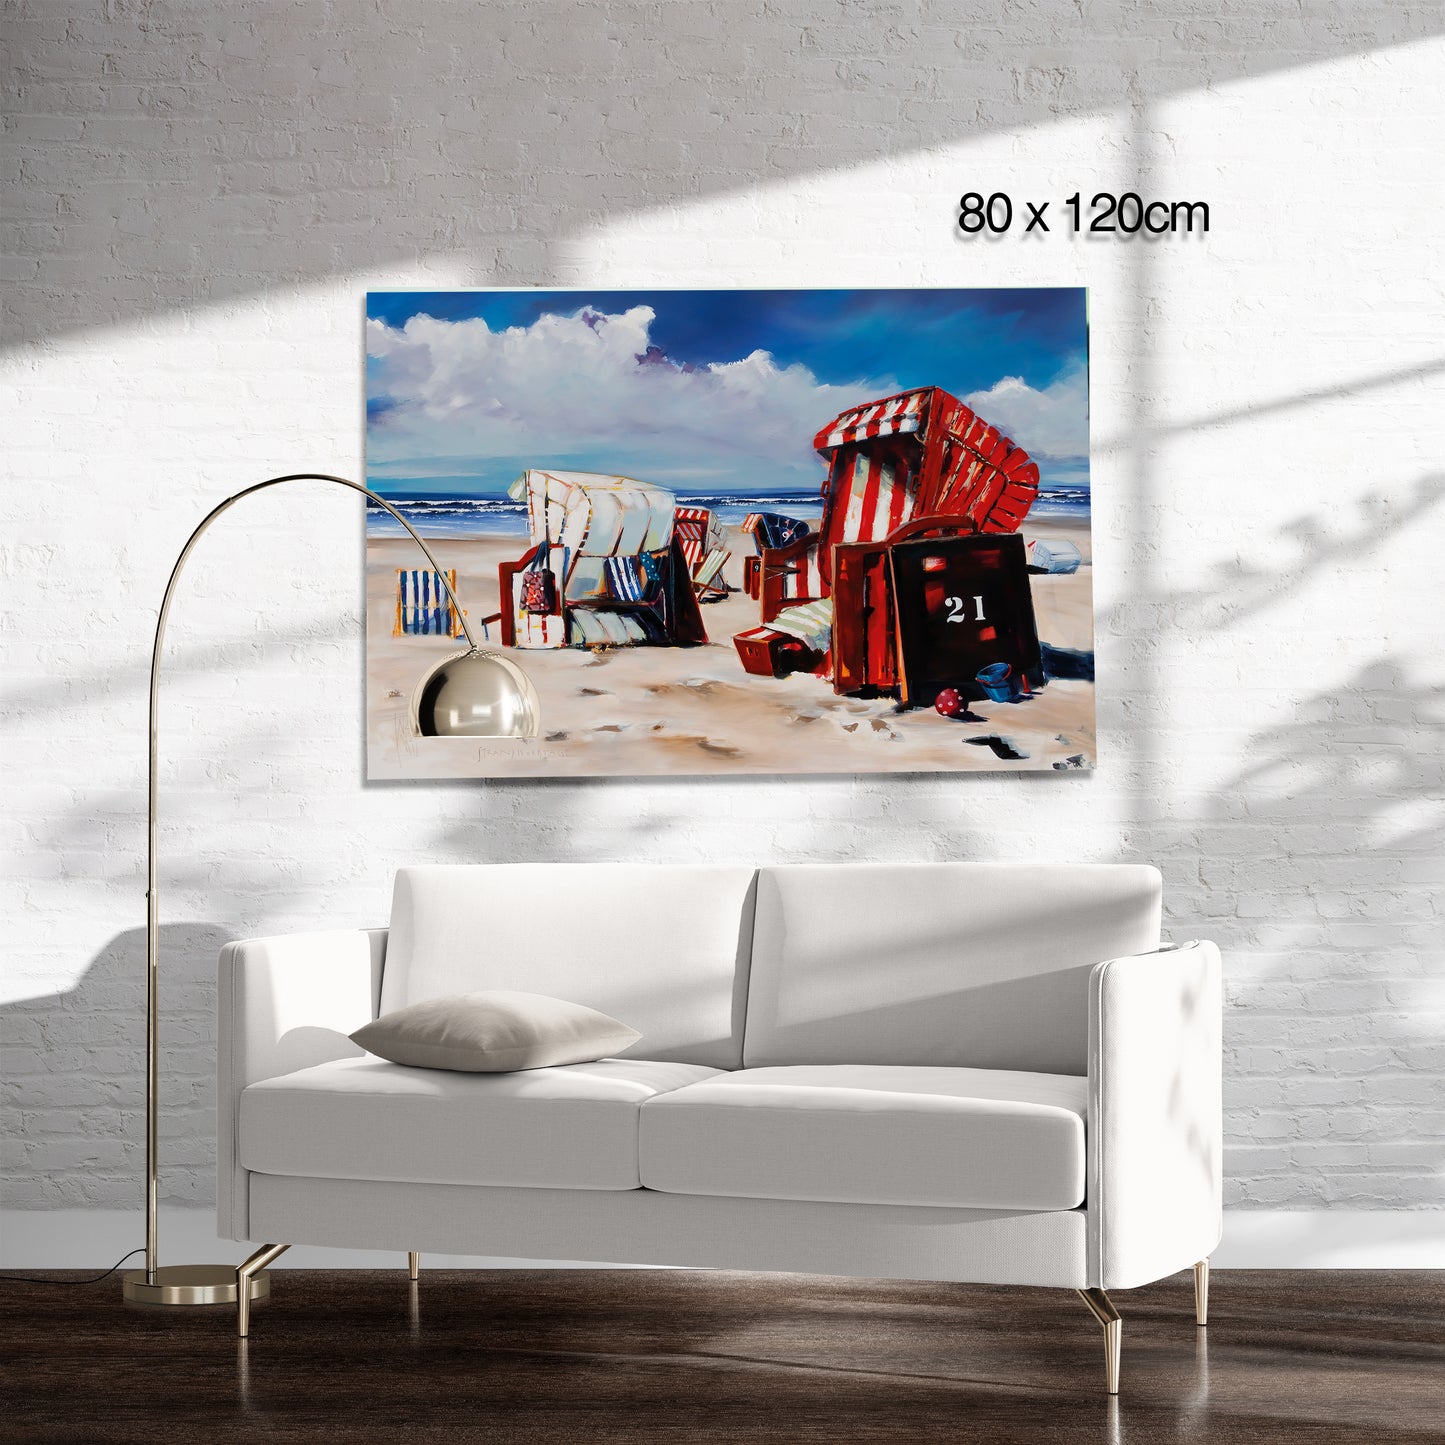 Strandkorbtage - Leinwanddruck auf Keilrahmen -  80 x 120 cm